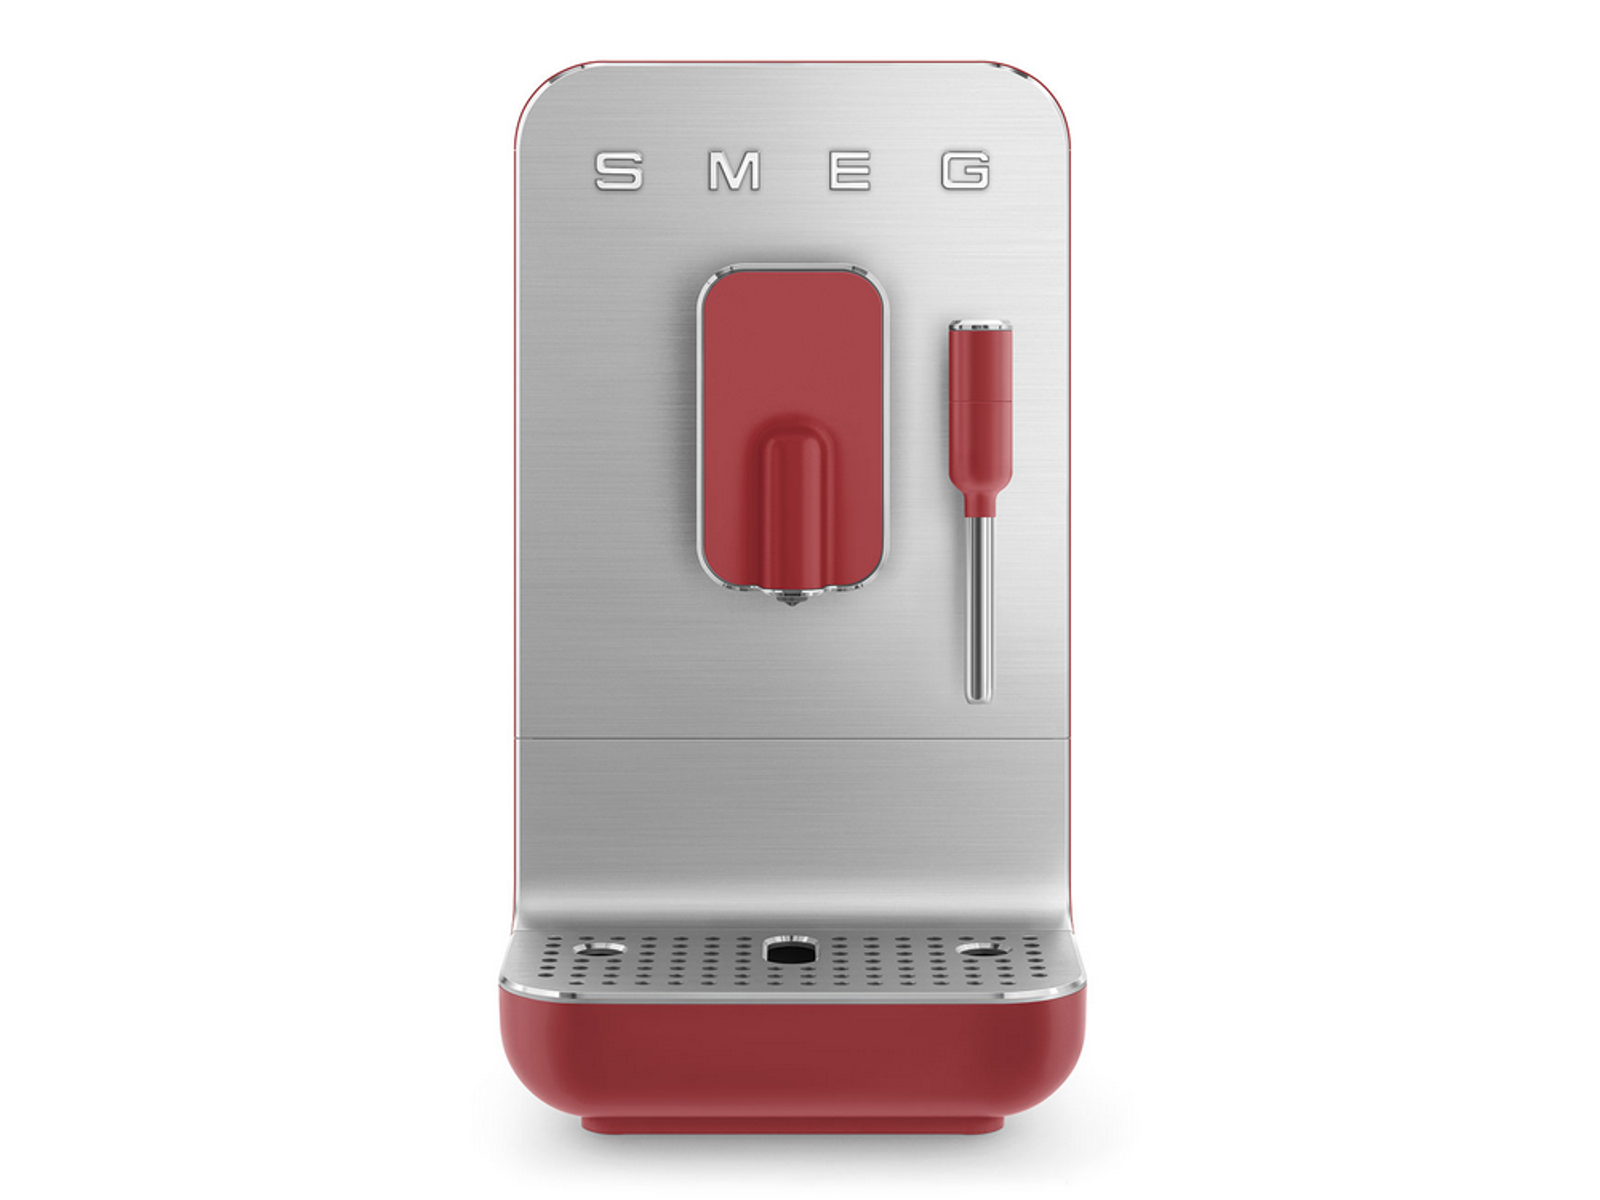 SMEG Smeg BCC02RDMEU Artikel|Rot|Stock Kaffeevollautomat mit Rot Kleingeräte Dampffunktion bcc02|Bestseller|Kaffee|Kaffeevollautomat|Kleingerät|Meistgesuchte